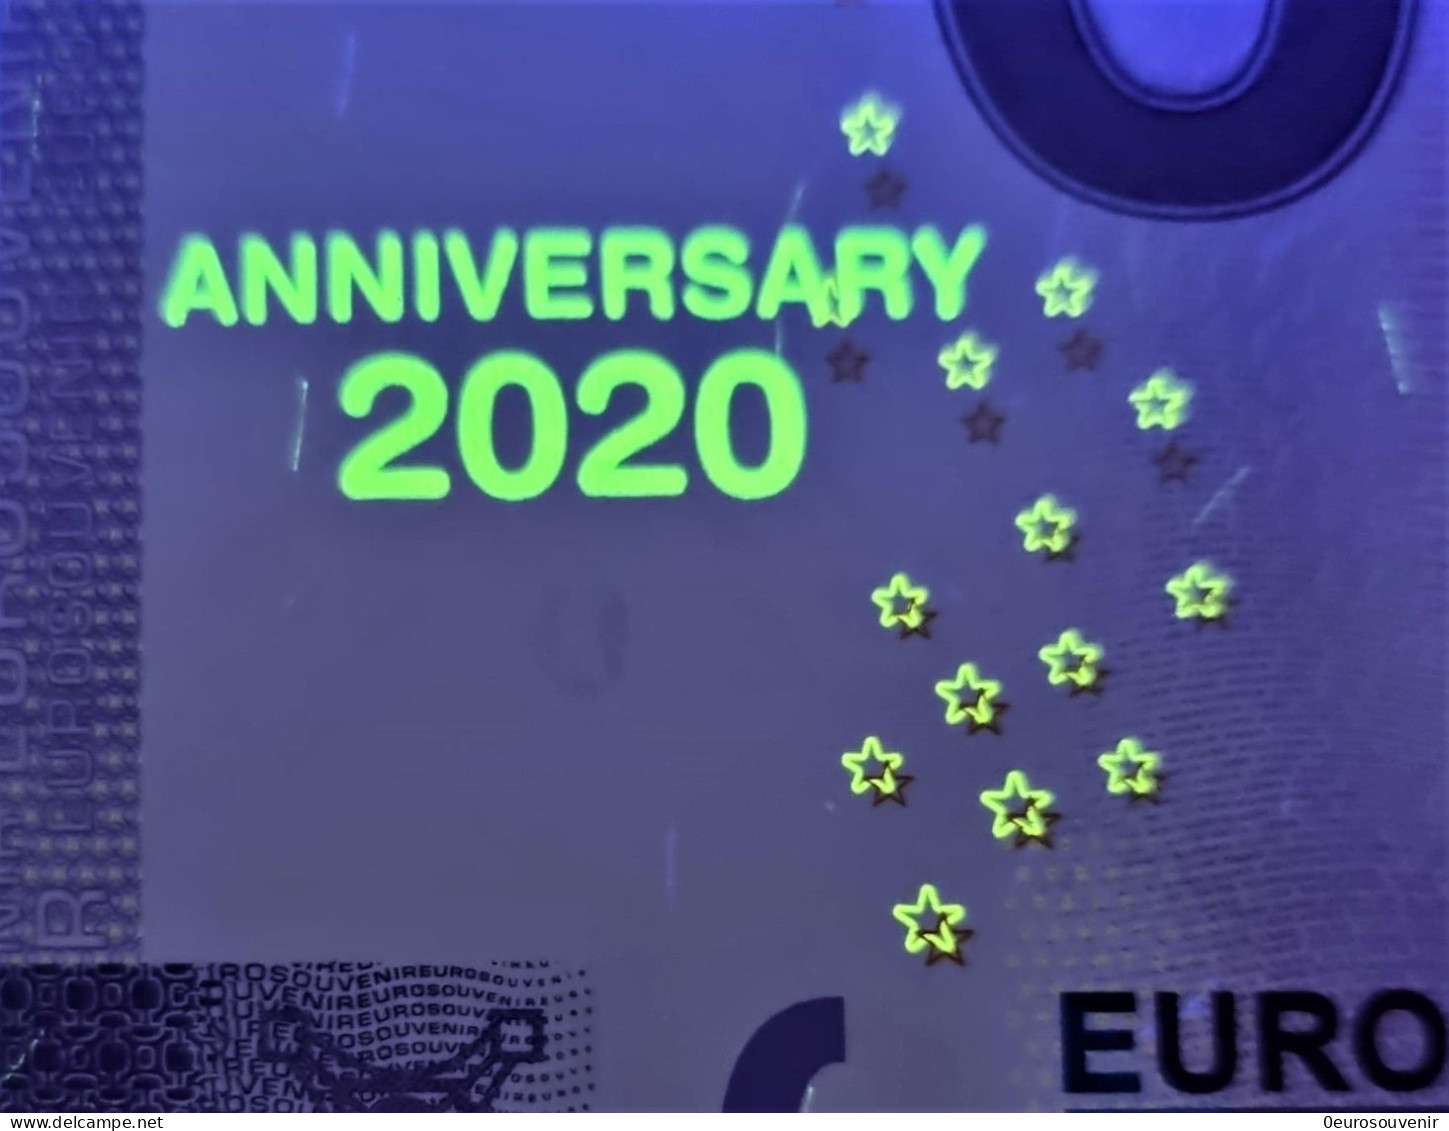 0-Euro XEJB 2021-8 AFFENBERG SALEM - 45 JAHRE Set NORMAL+ANNIVERSARY - Pruebas Privadas